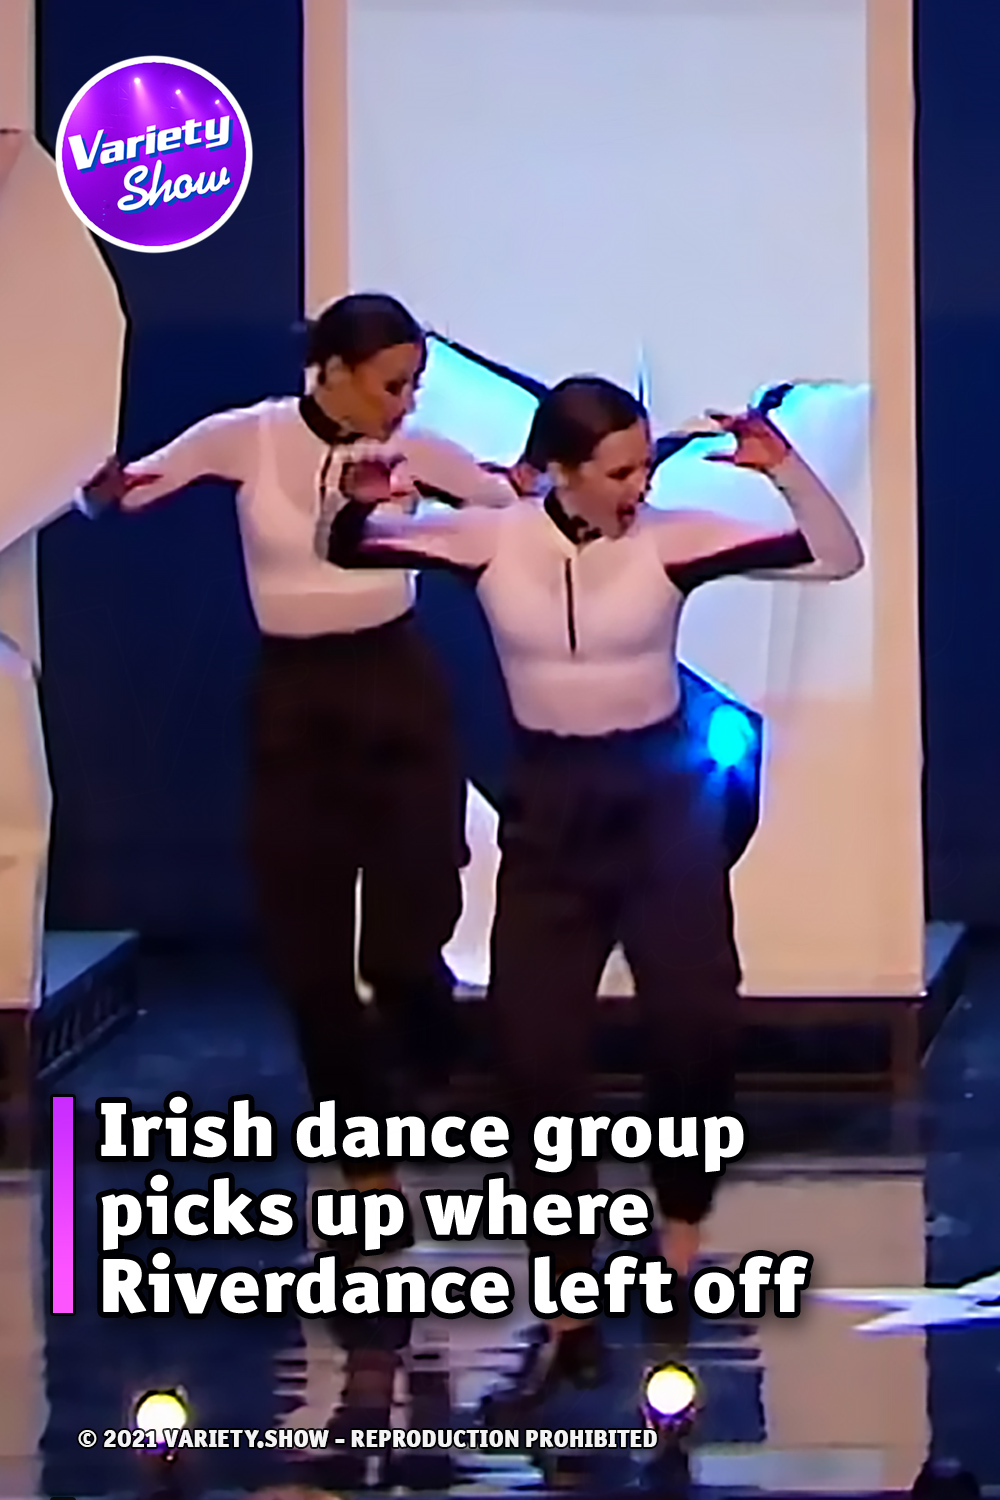 Irish dance group picks up where Riverdance left off